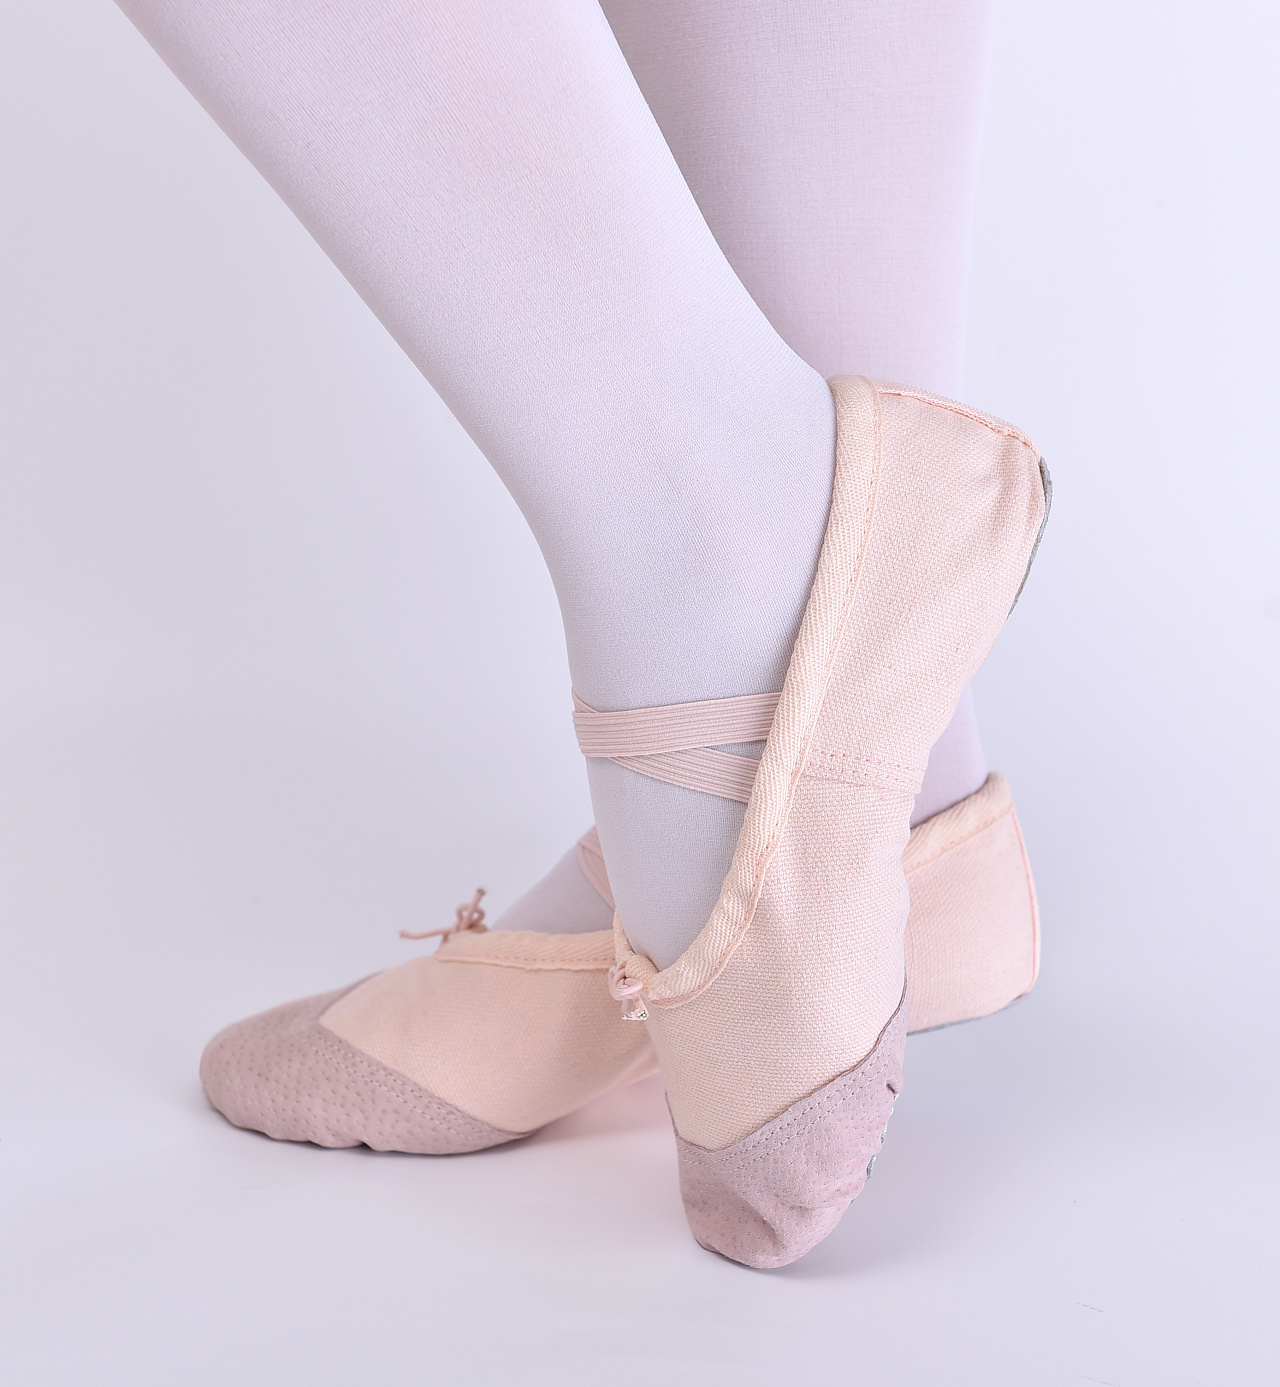 2019 Adult Professional Dance Shoes Ballet Pointe Shoes - Buy Pointe Shoes,Dance Shoes,Ballet ...